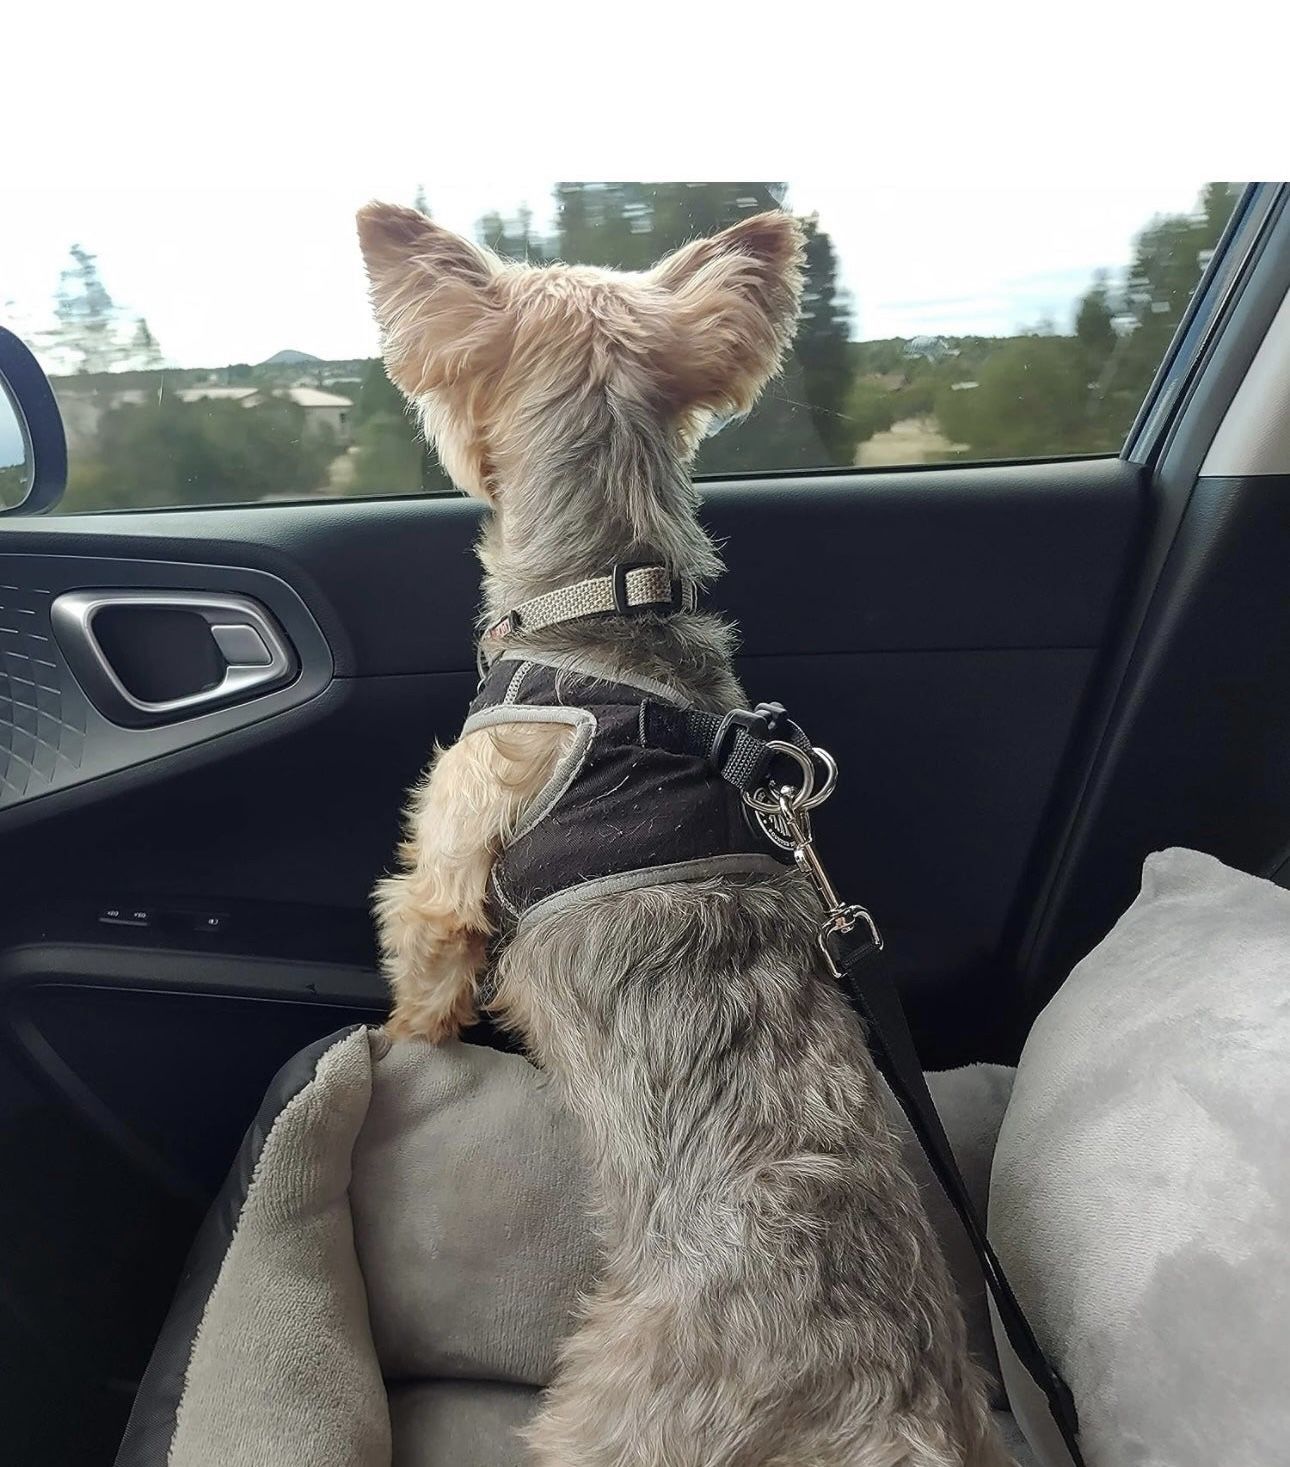 New Dog Booster Pet Car seat 